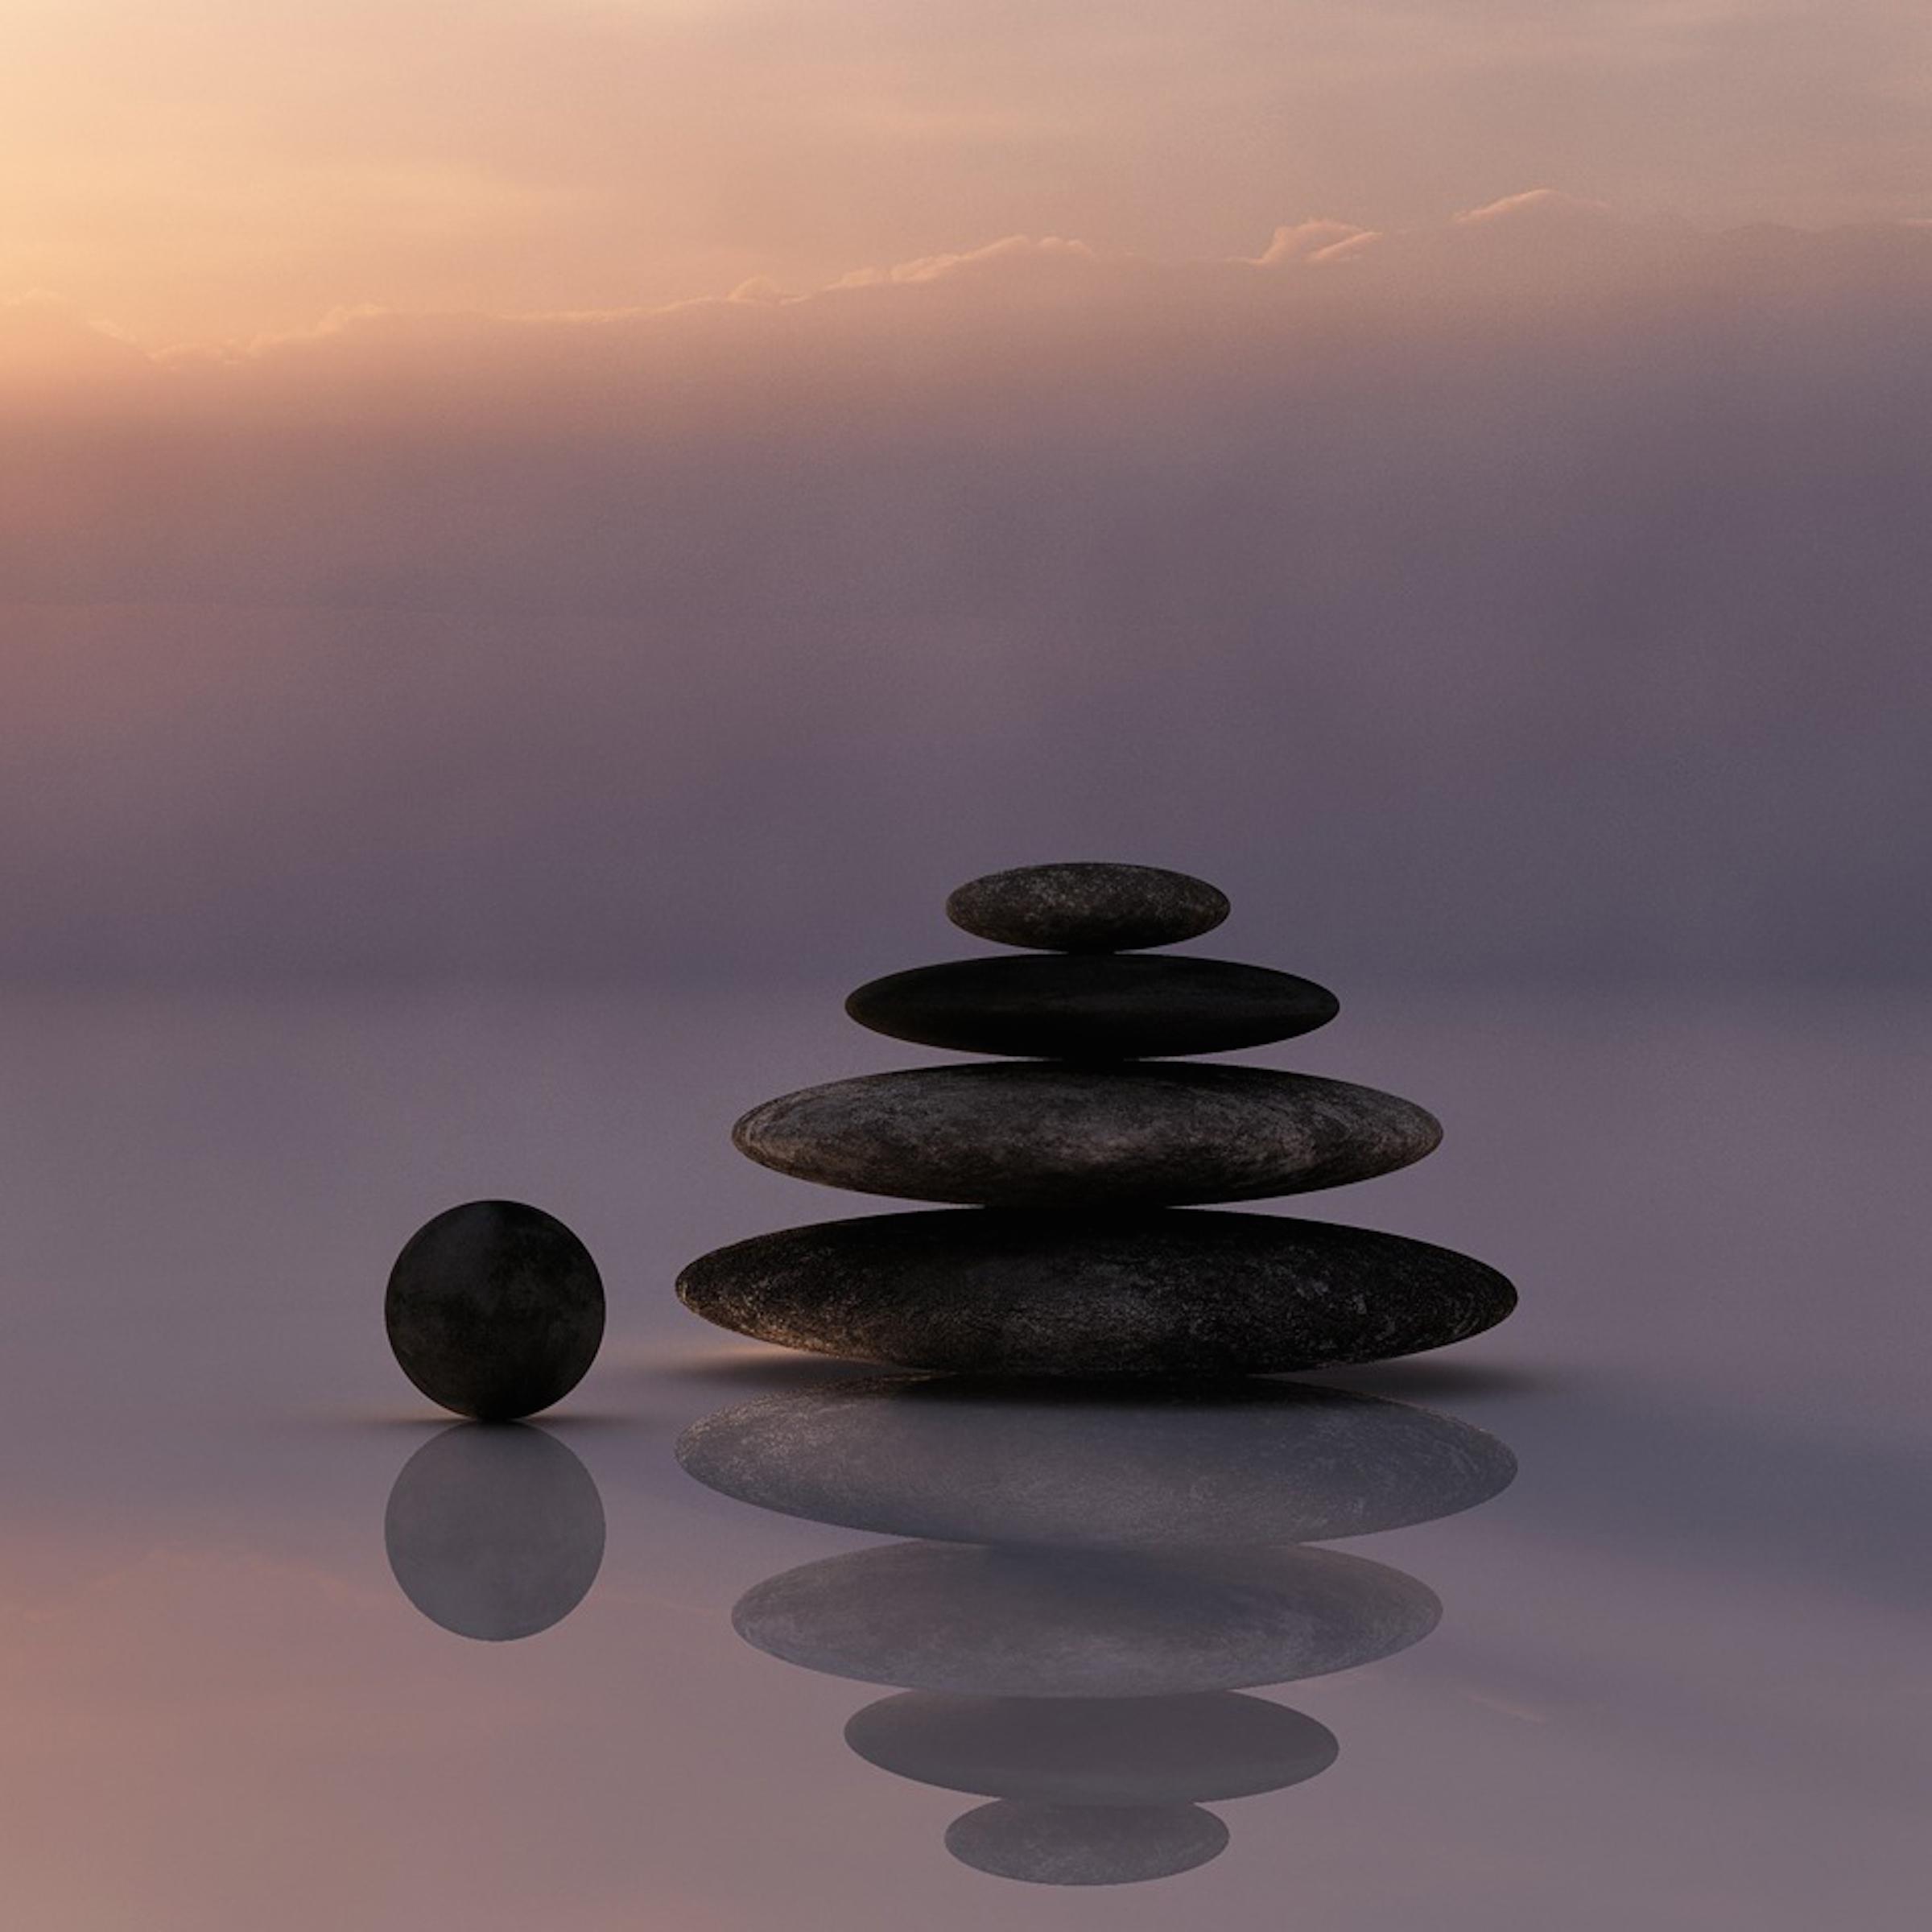 Zen Mood - Serene Nature Sounds for Instant Deep Focus at Work, School & Home, for Total Productivity & Complete Zen Ambience